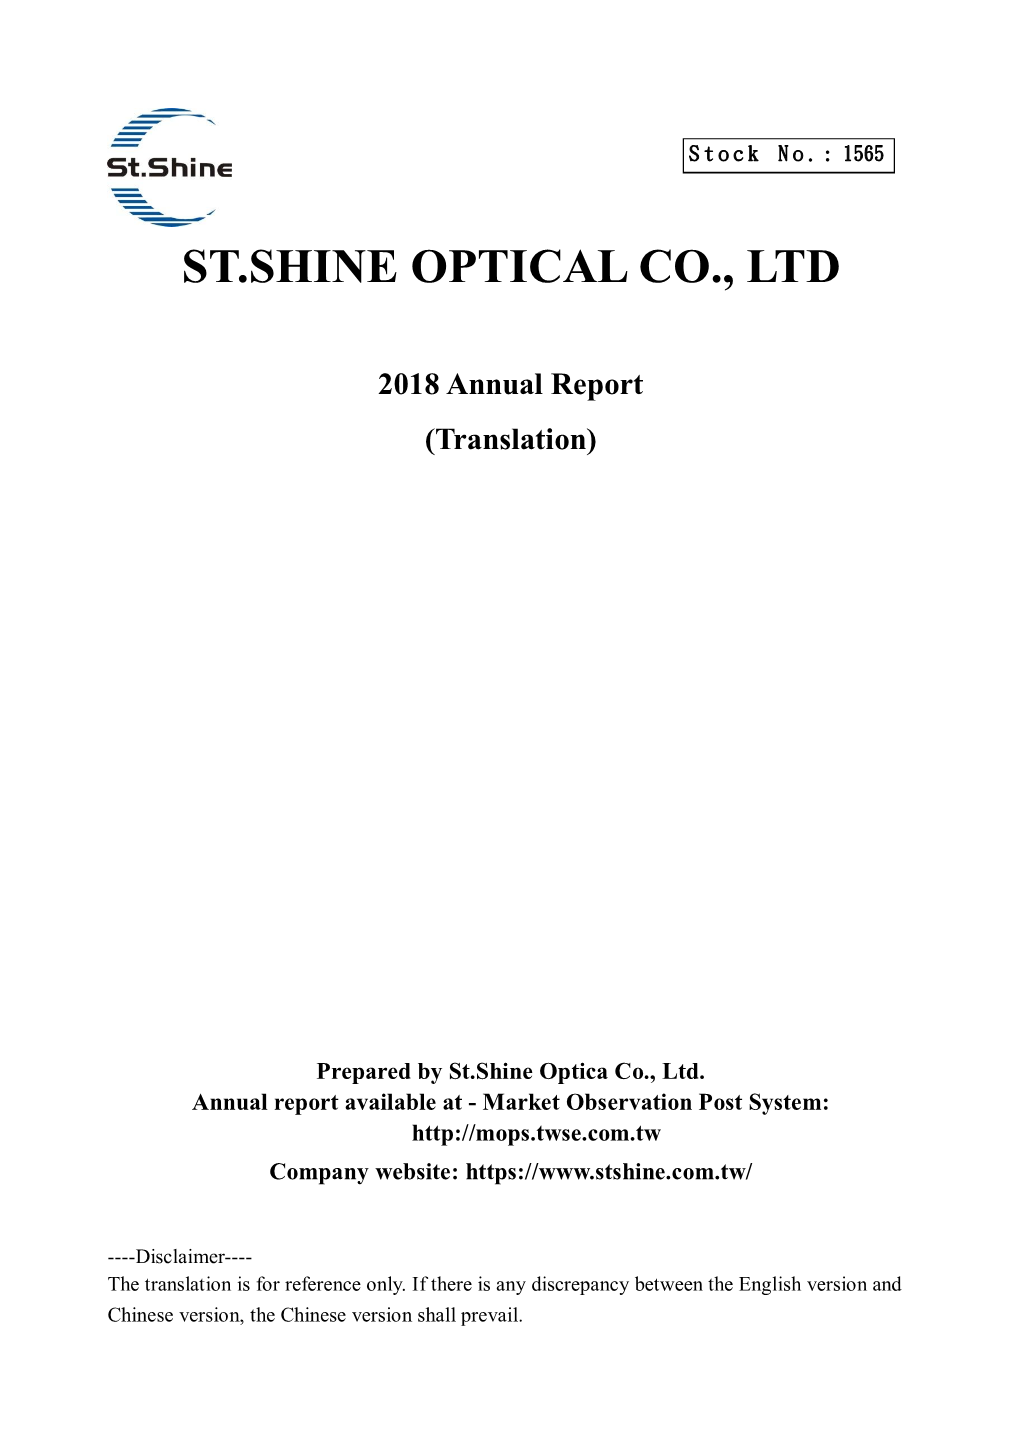 2018 Annual Report (Translation)